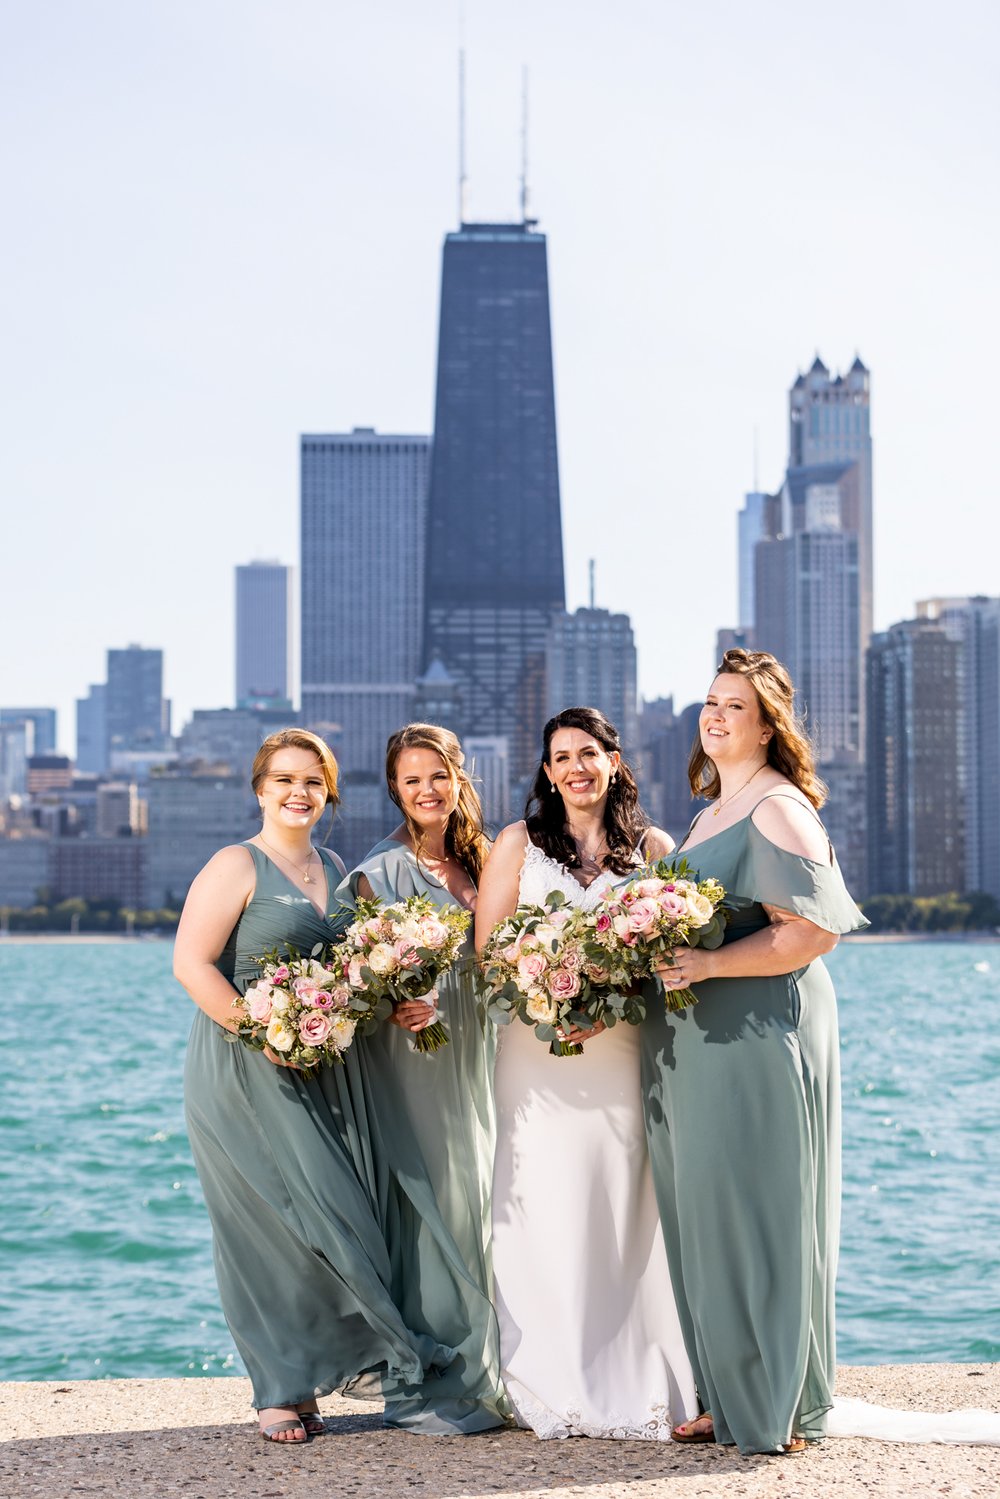 Alex Maldonado Photography | Chicago Wedding Photographer | brides maides and wedding party photos.jpg